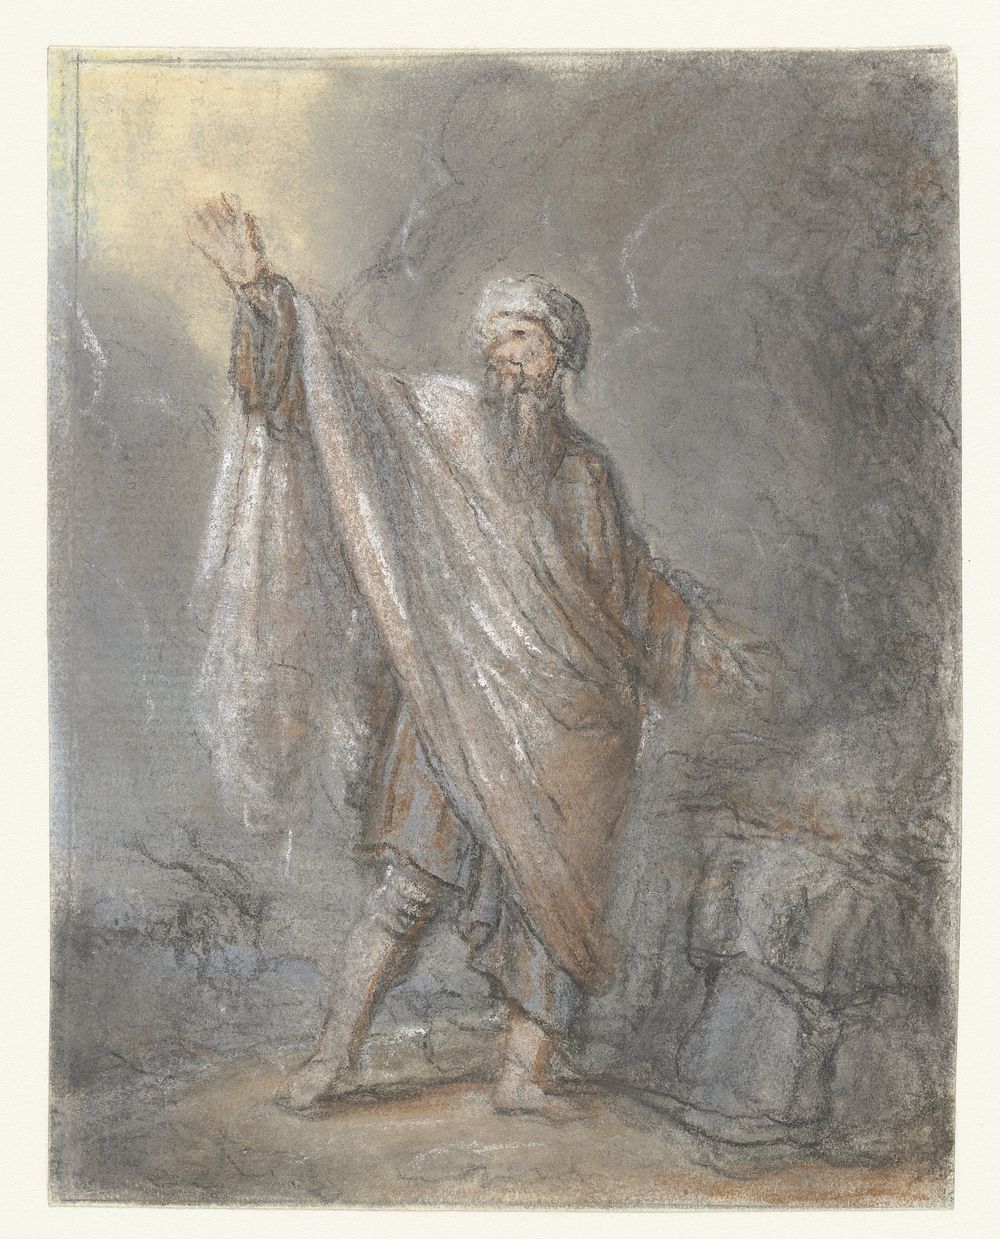 Staande man bij brandend offer (1700 - 1800) by anonymous